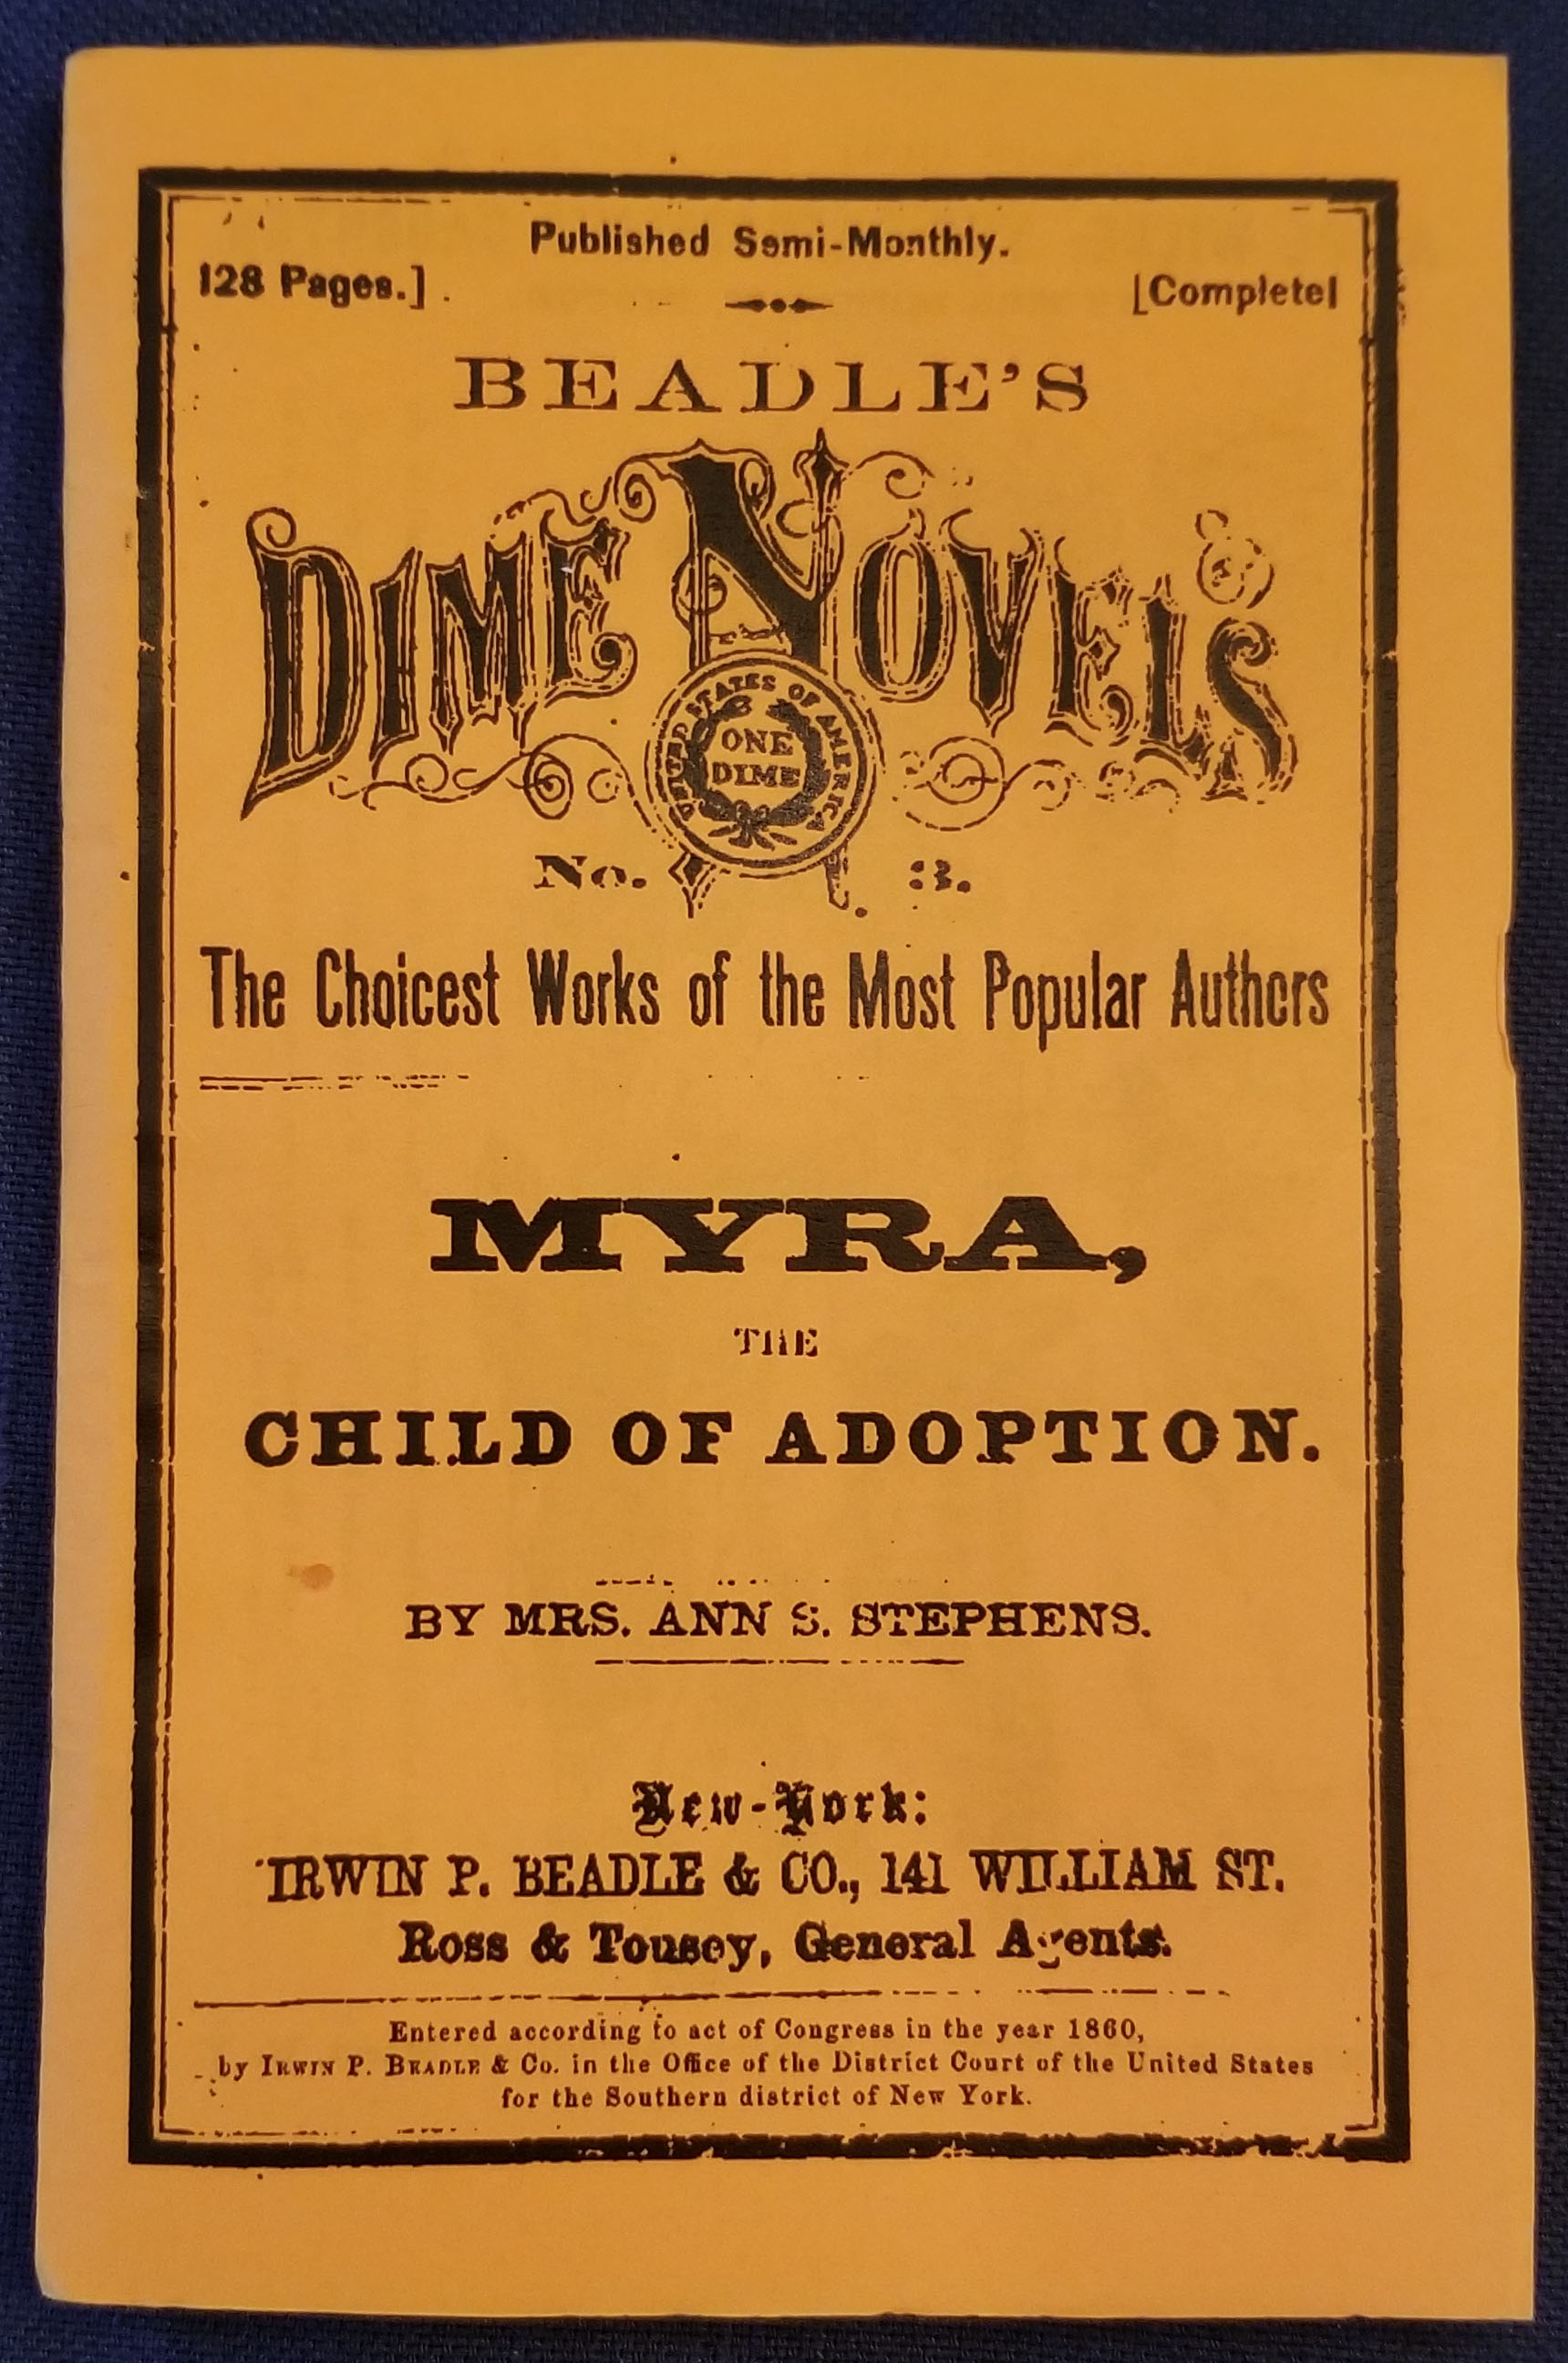 Dime Novel - Myra, Child of Adoption